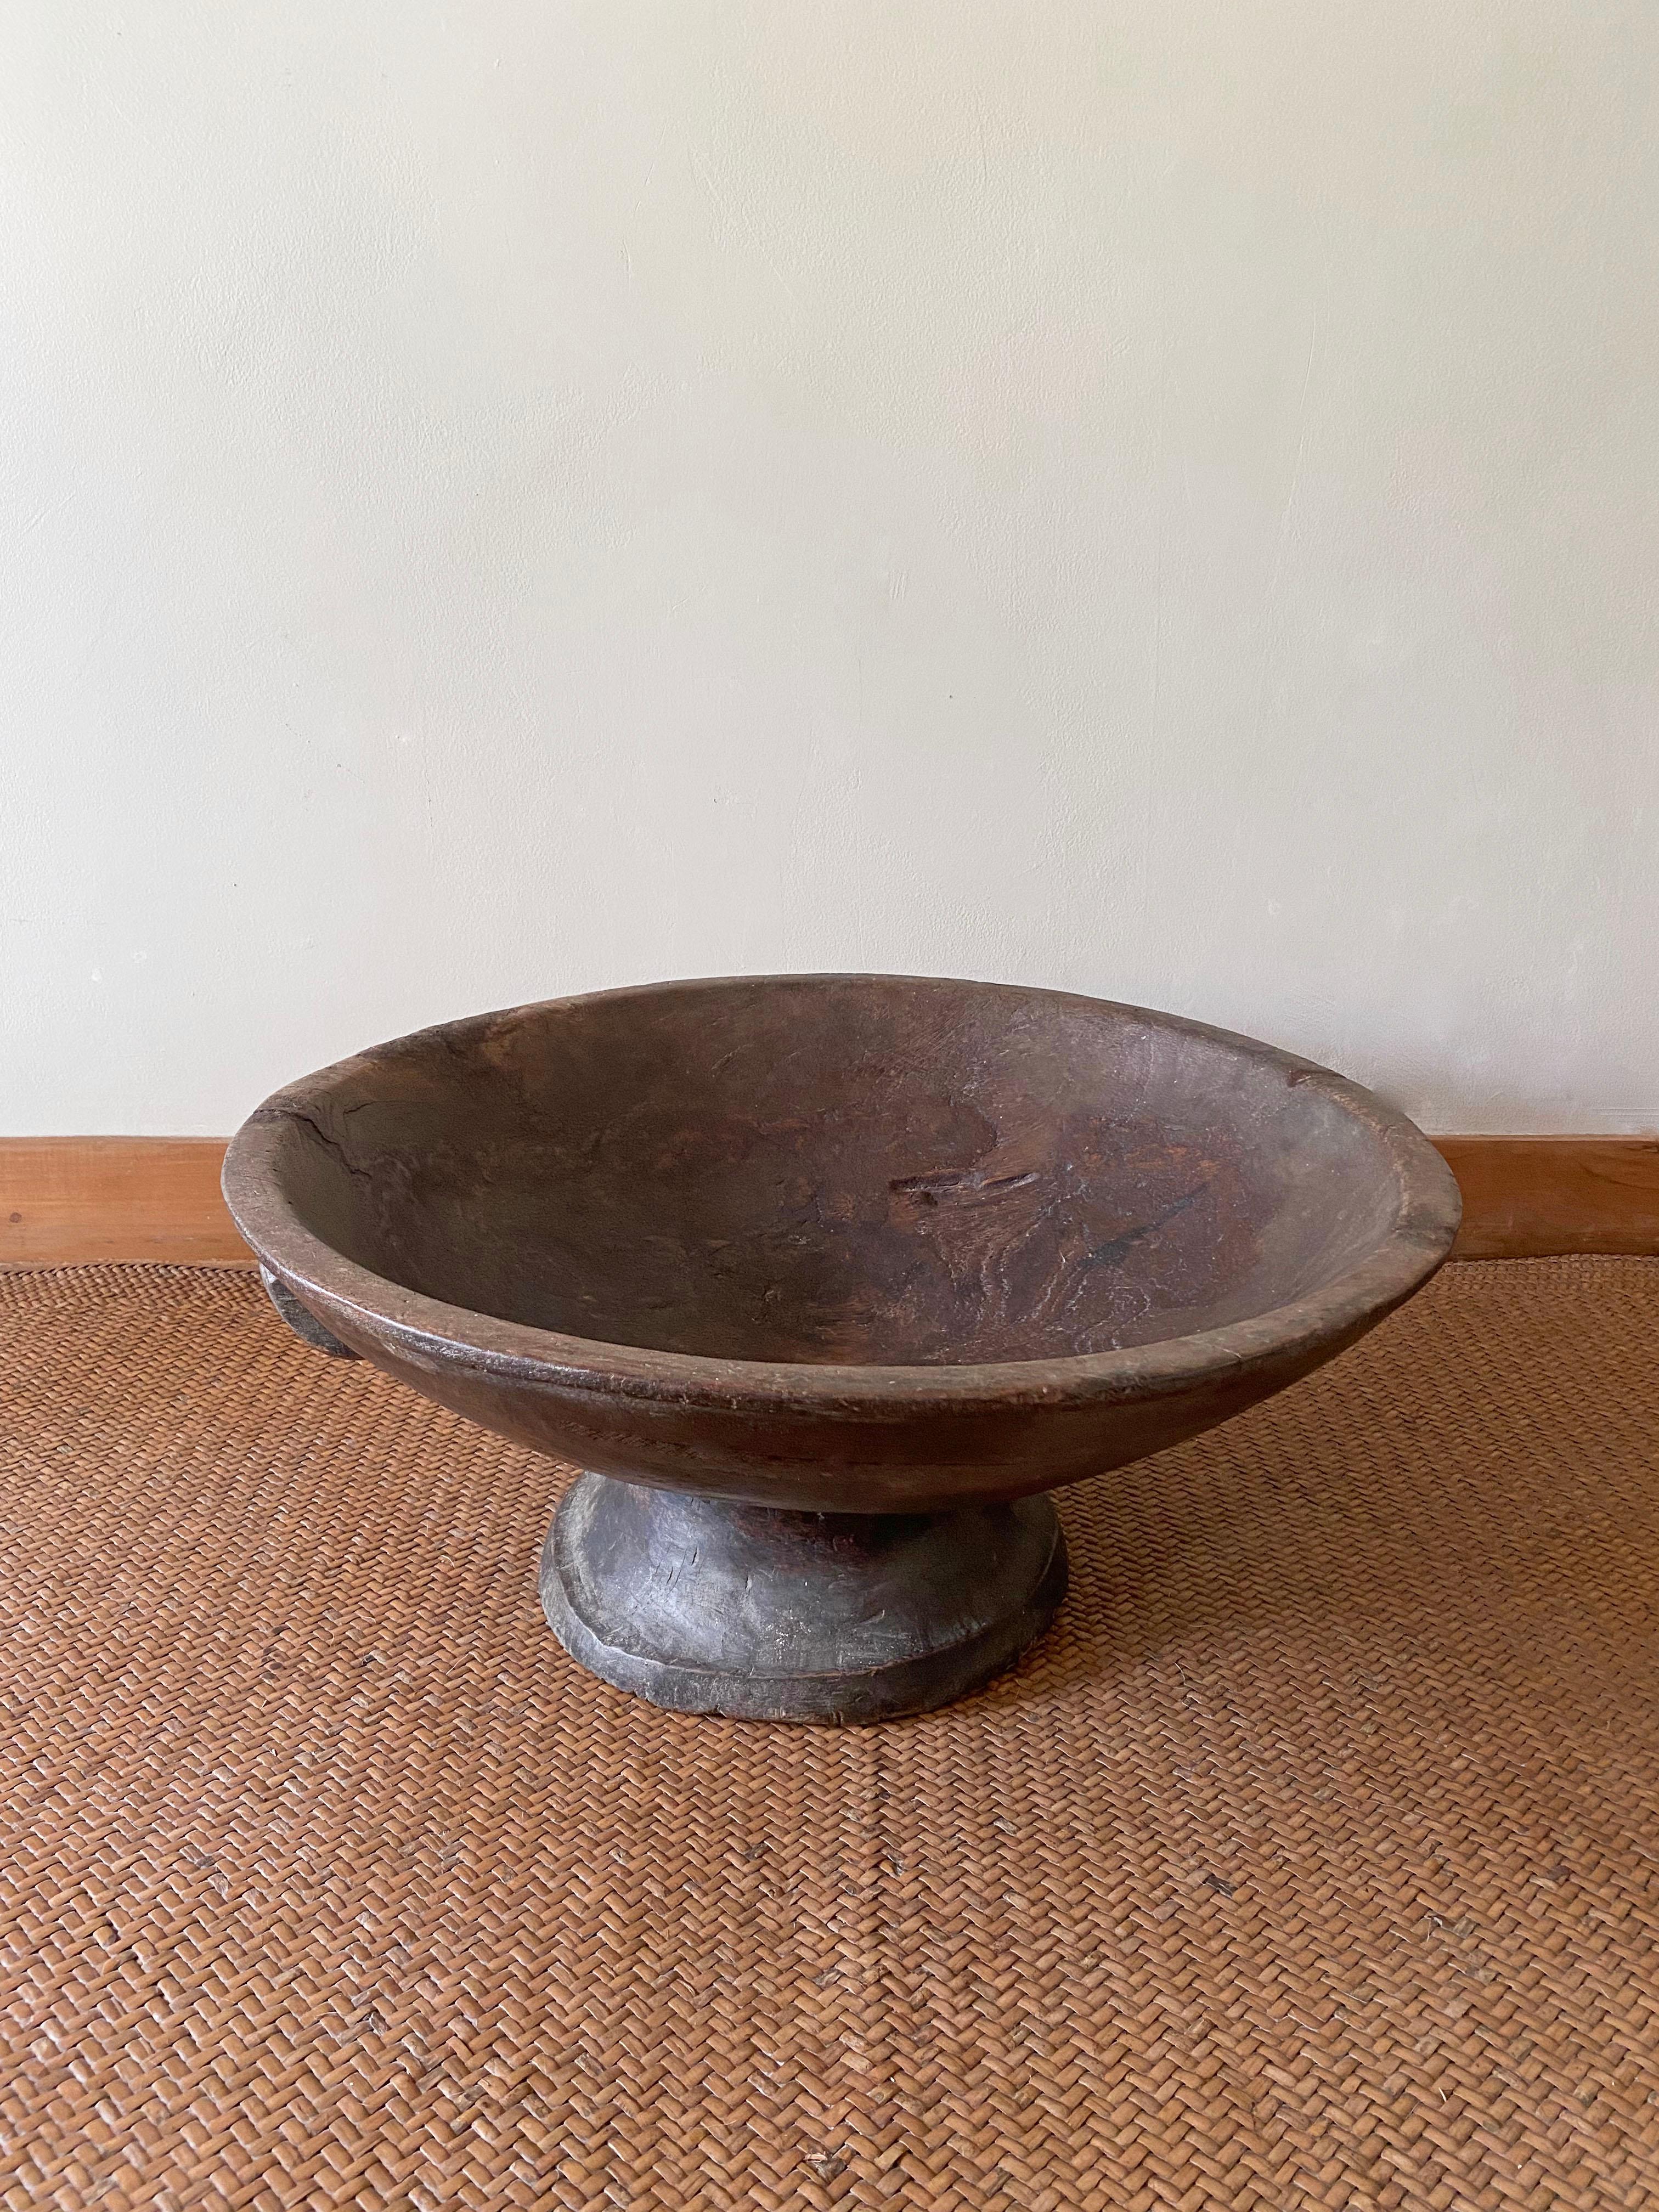 Batak tribe wood ceremonial bowl, early 20th century

Dimensions: Diameter 56cm x height 24cm.